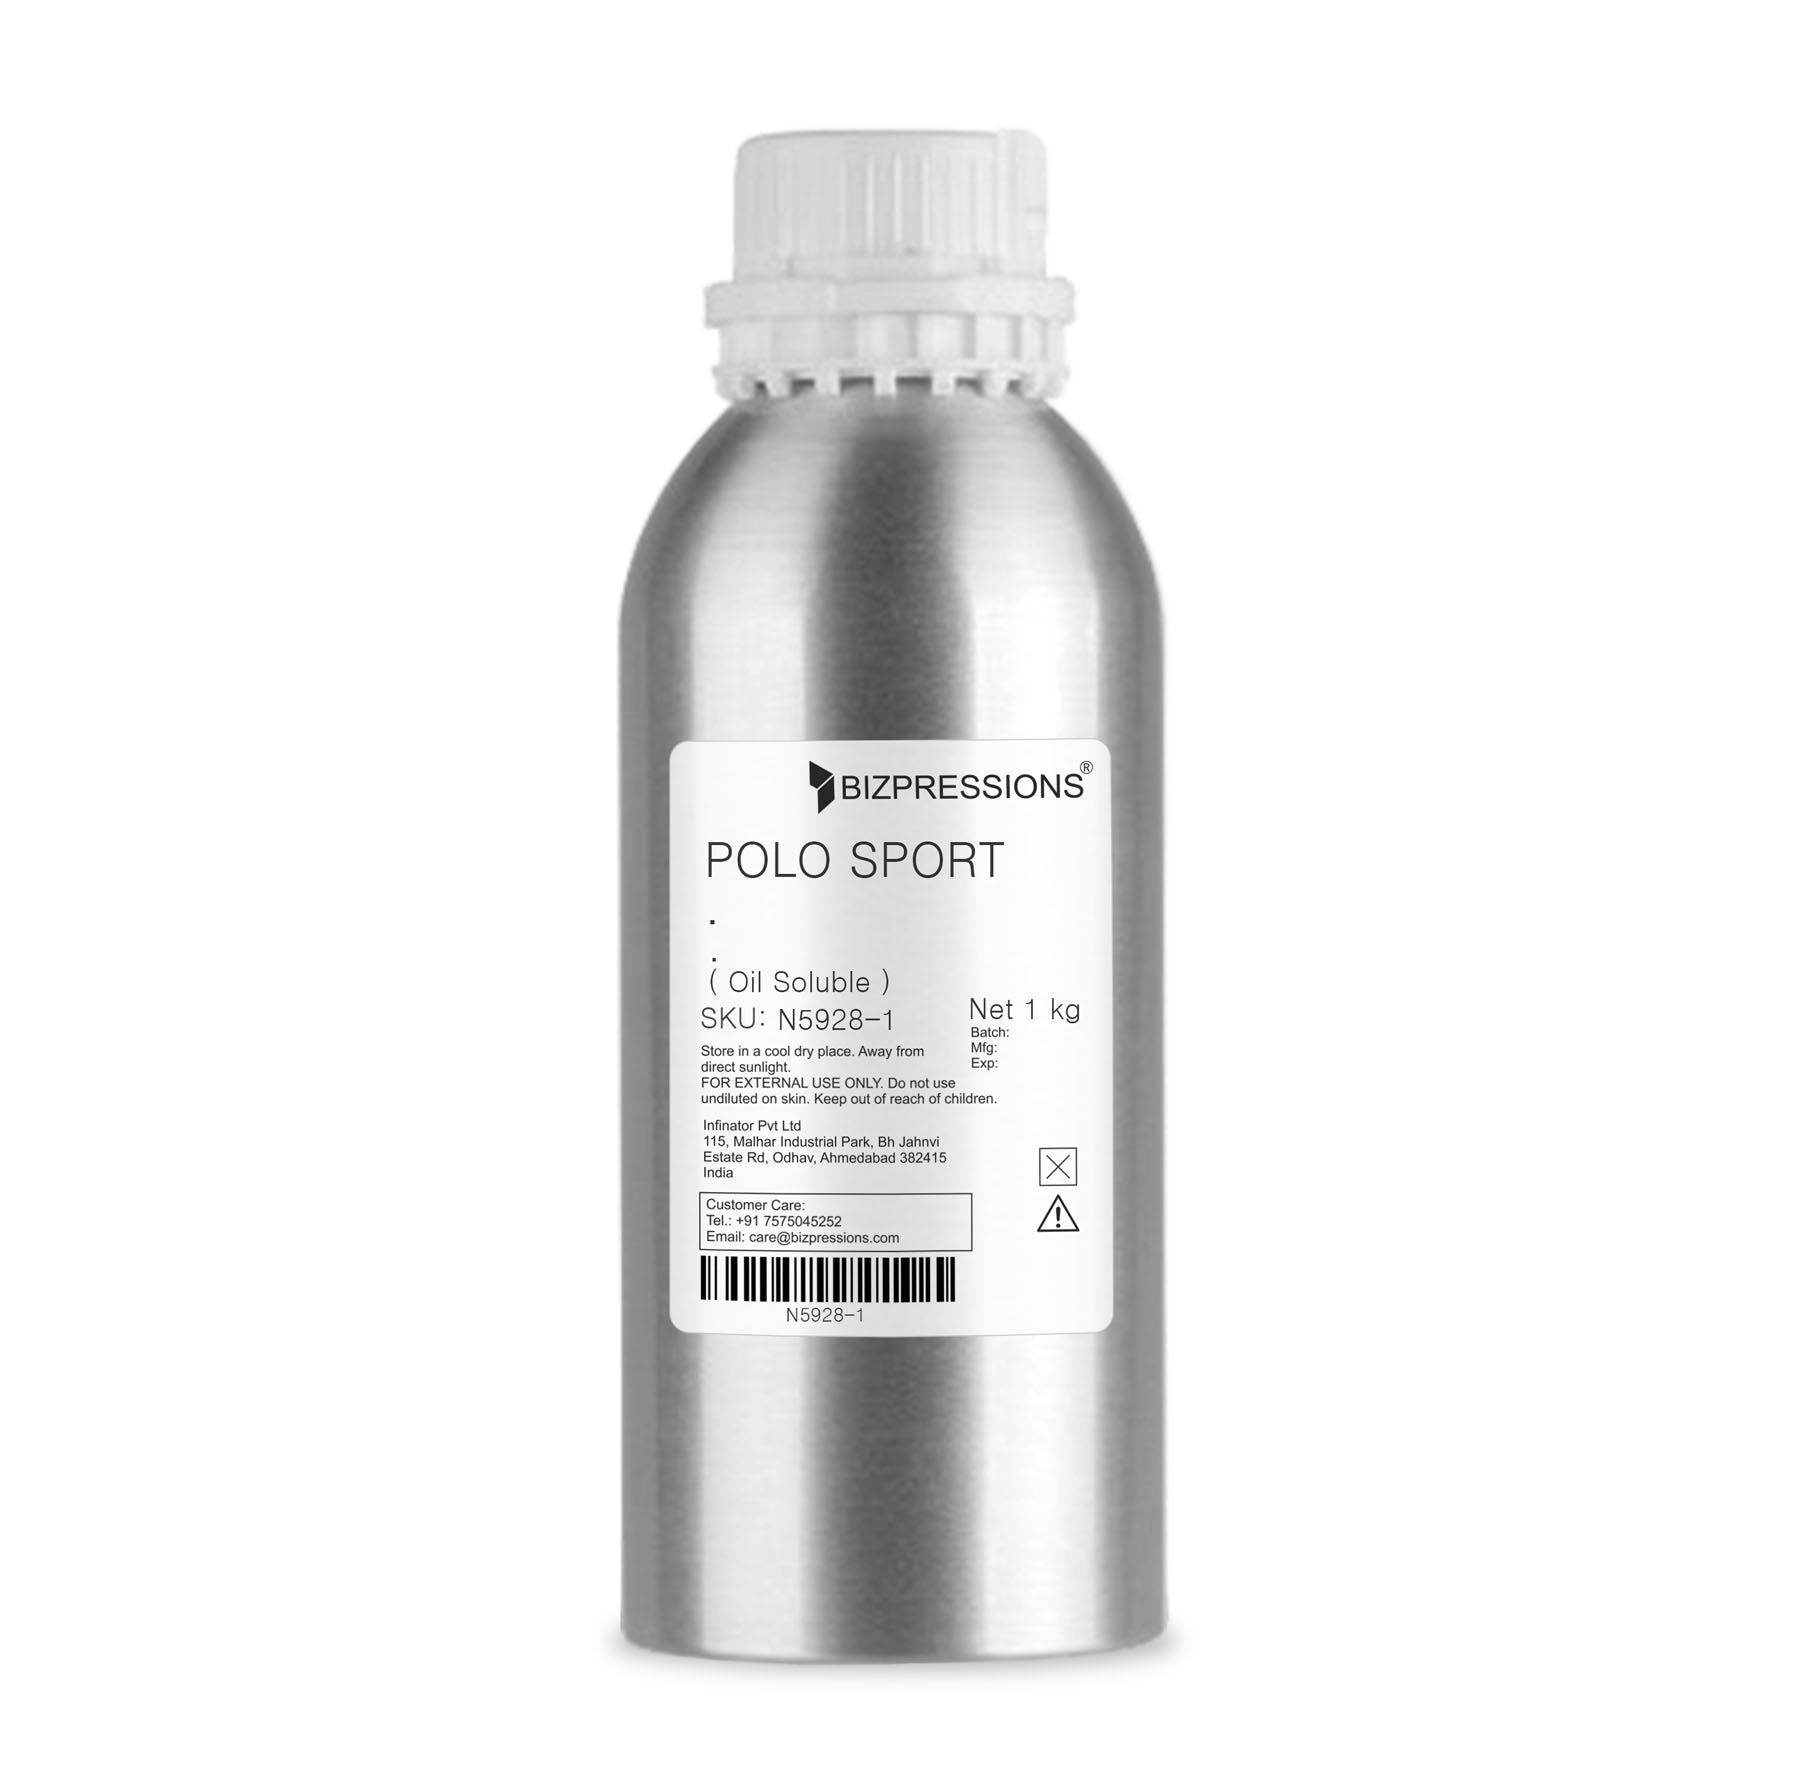 POLO SPORT - Fragrance ( Oil Soluble ) - 1 kg